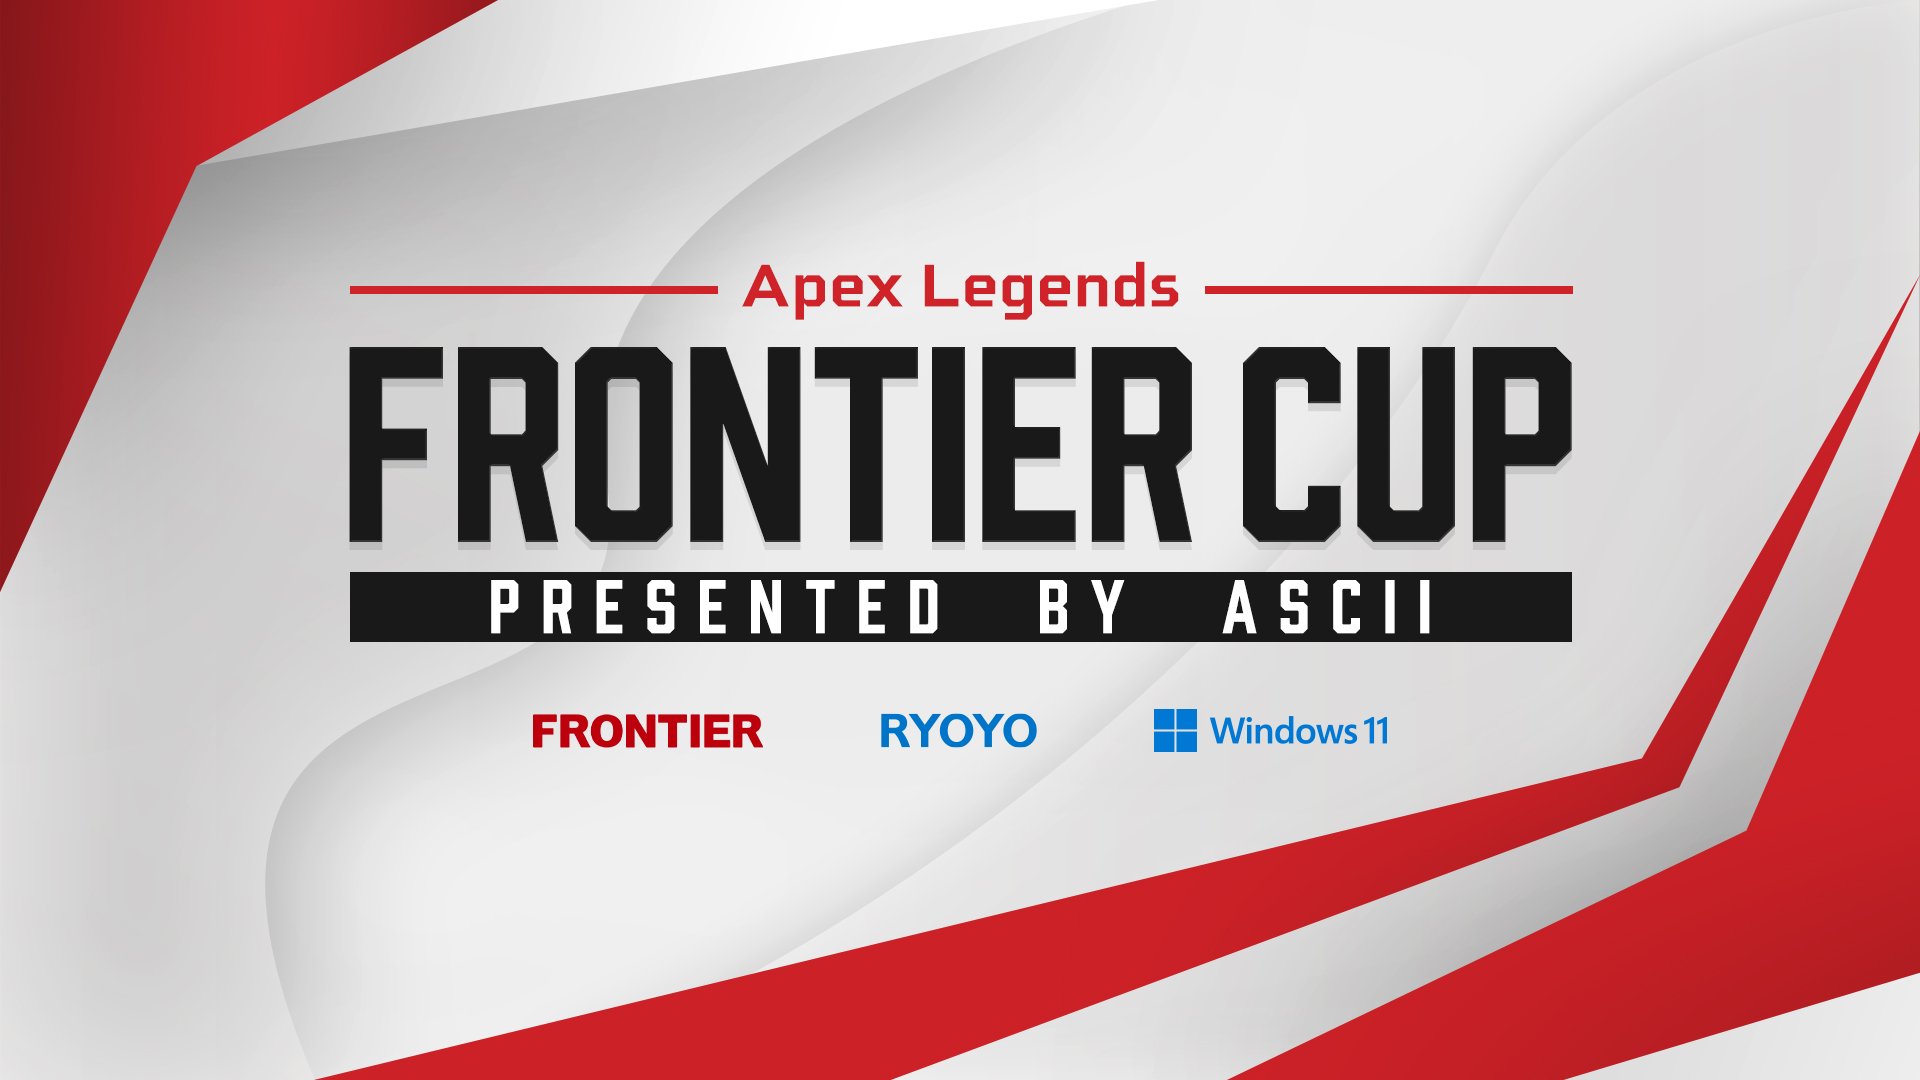 【大会情報】FRONTIER CUP -Apex Legends- presented by ASCII【2022年9月30日】